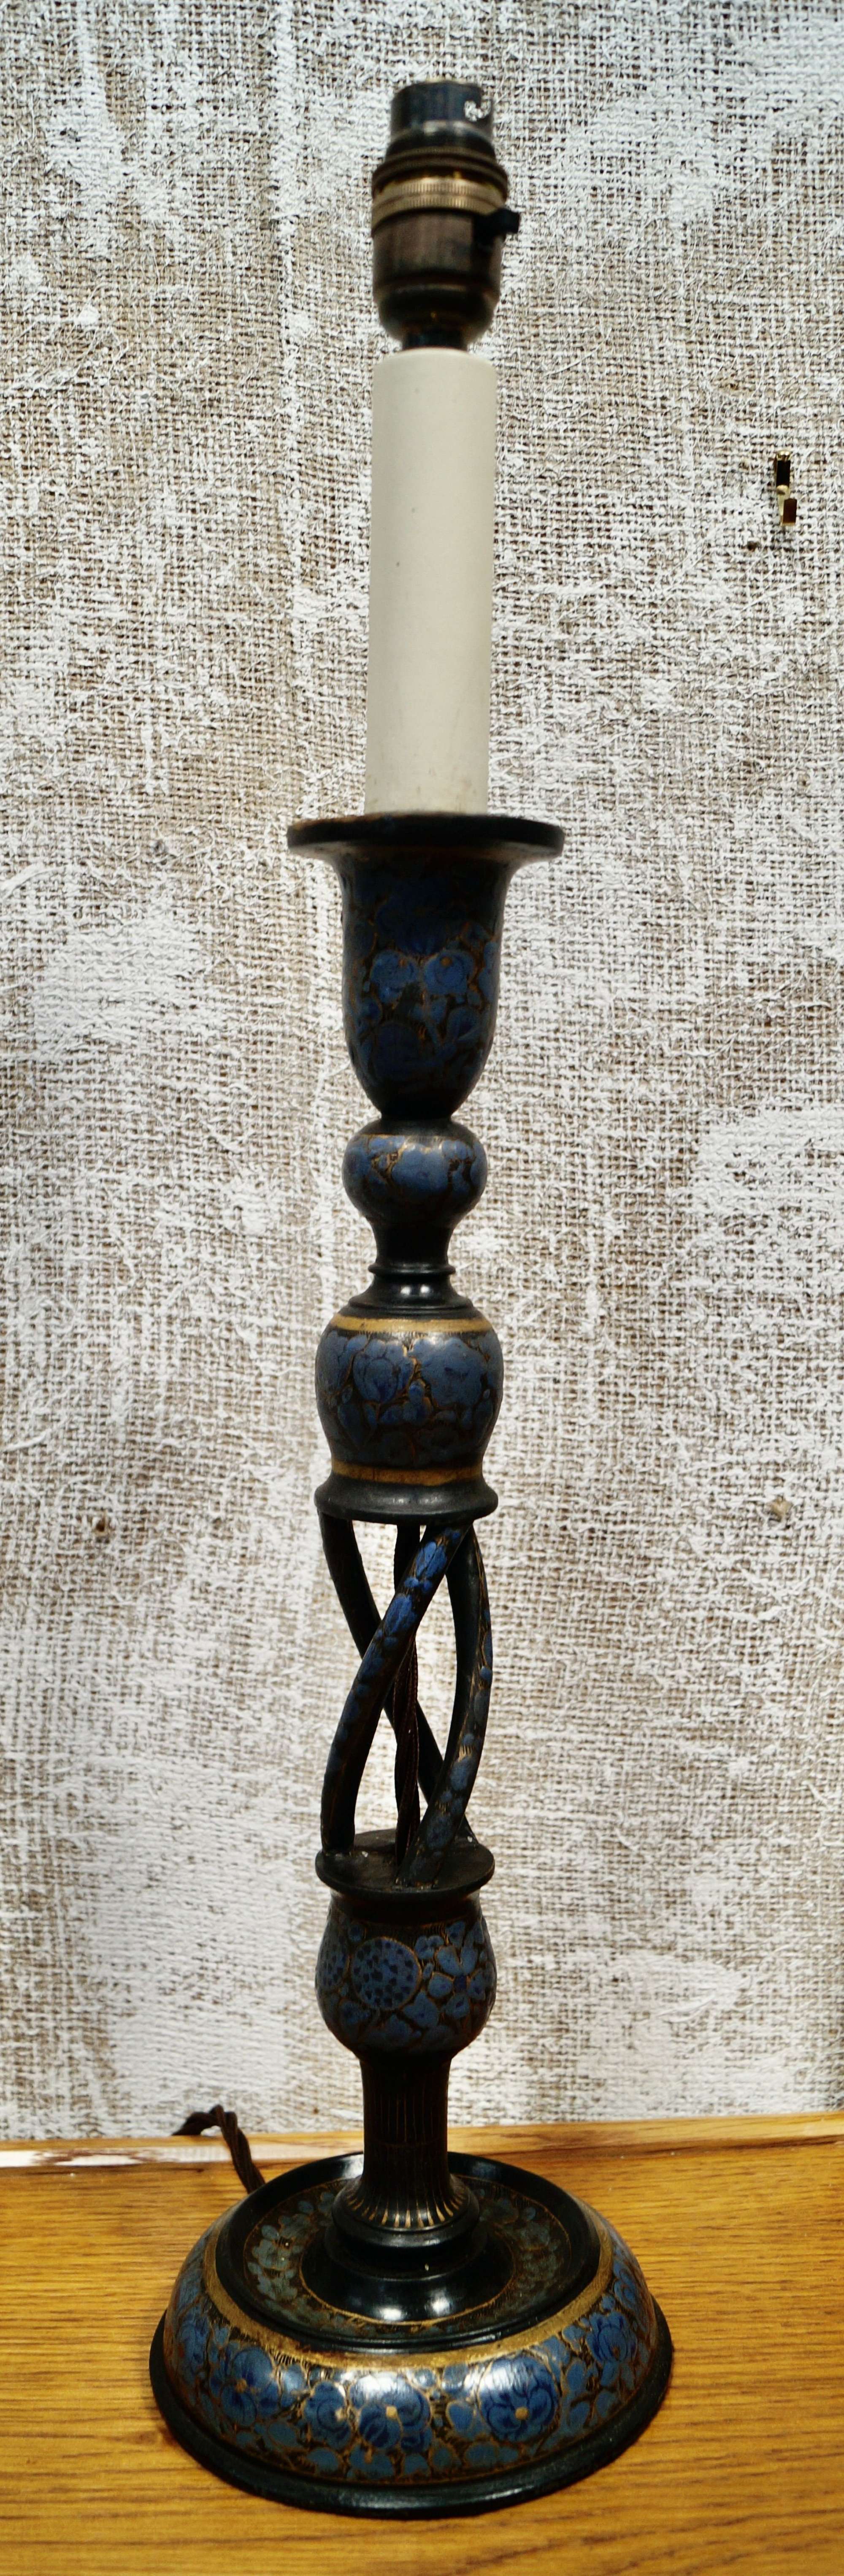 Antique Kashmiri Candlestick Table Lamp